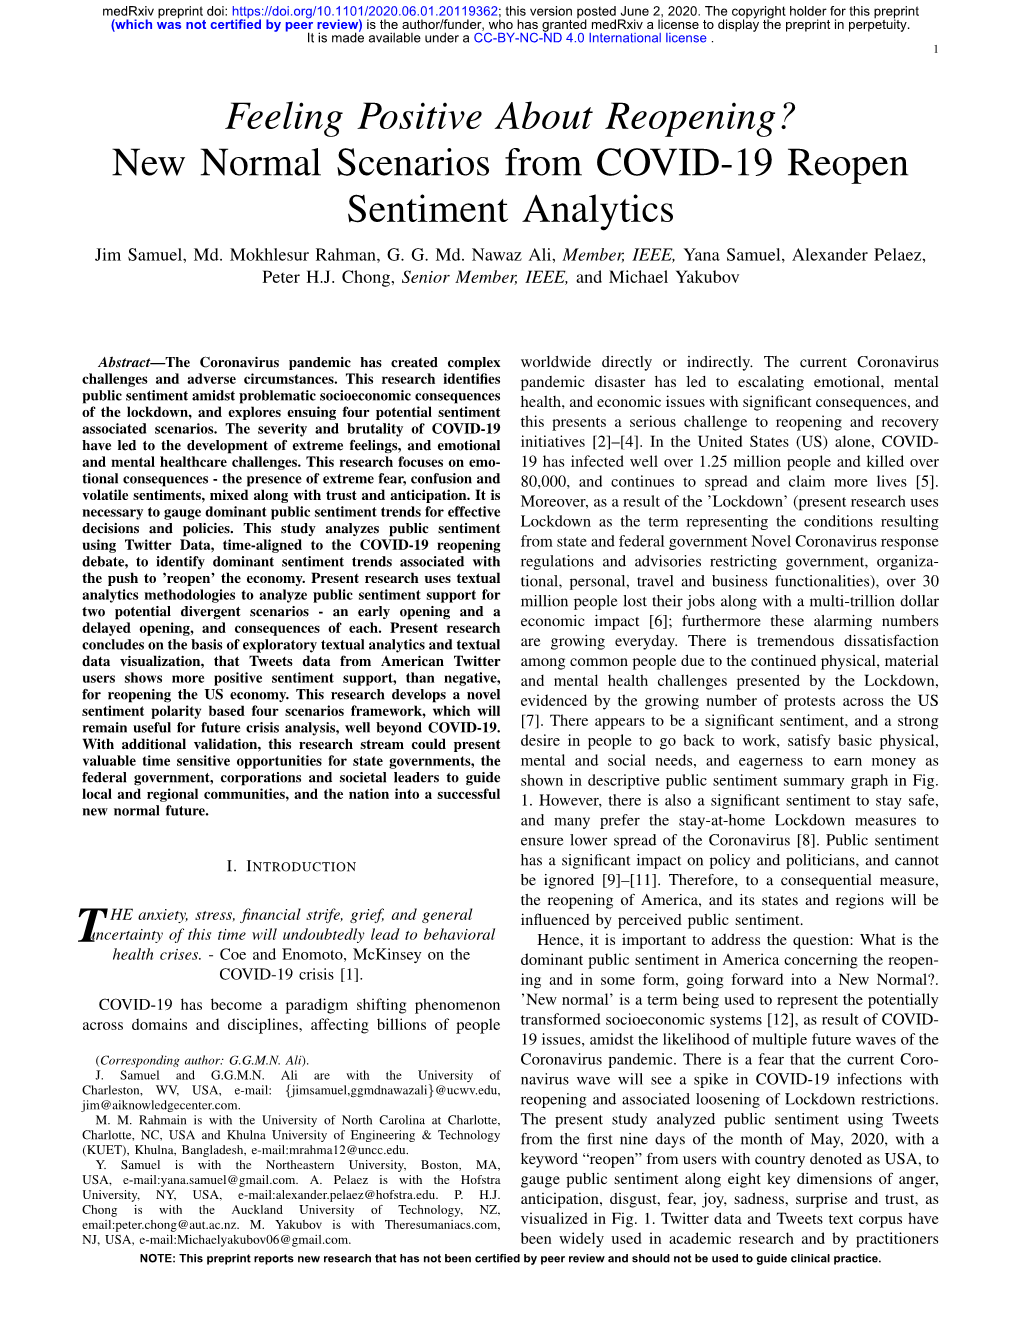 New Normal Scenarios from COVID-19 Reopen Sentiment Analytics Jim Samuel, Md